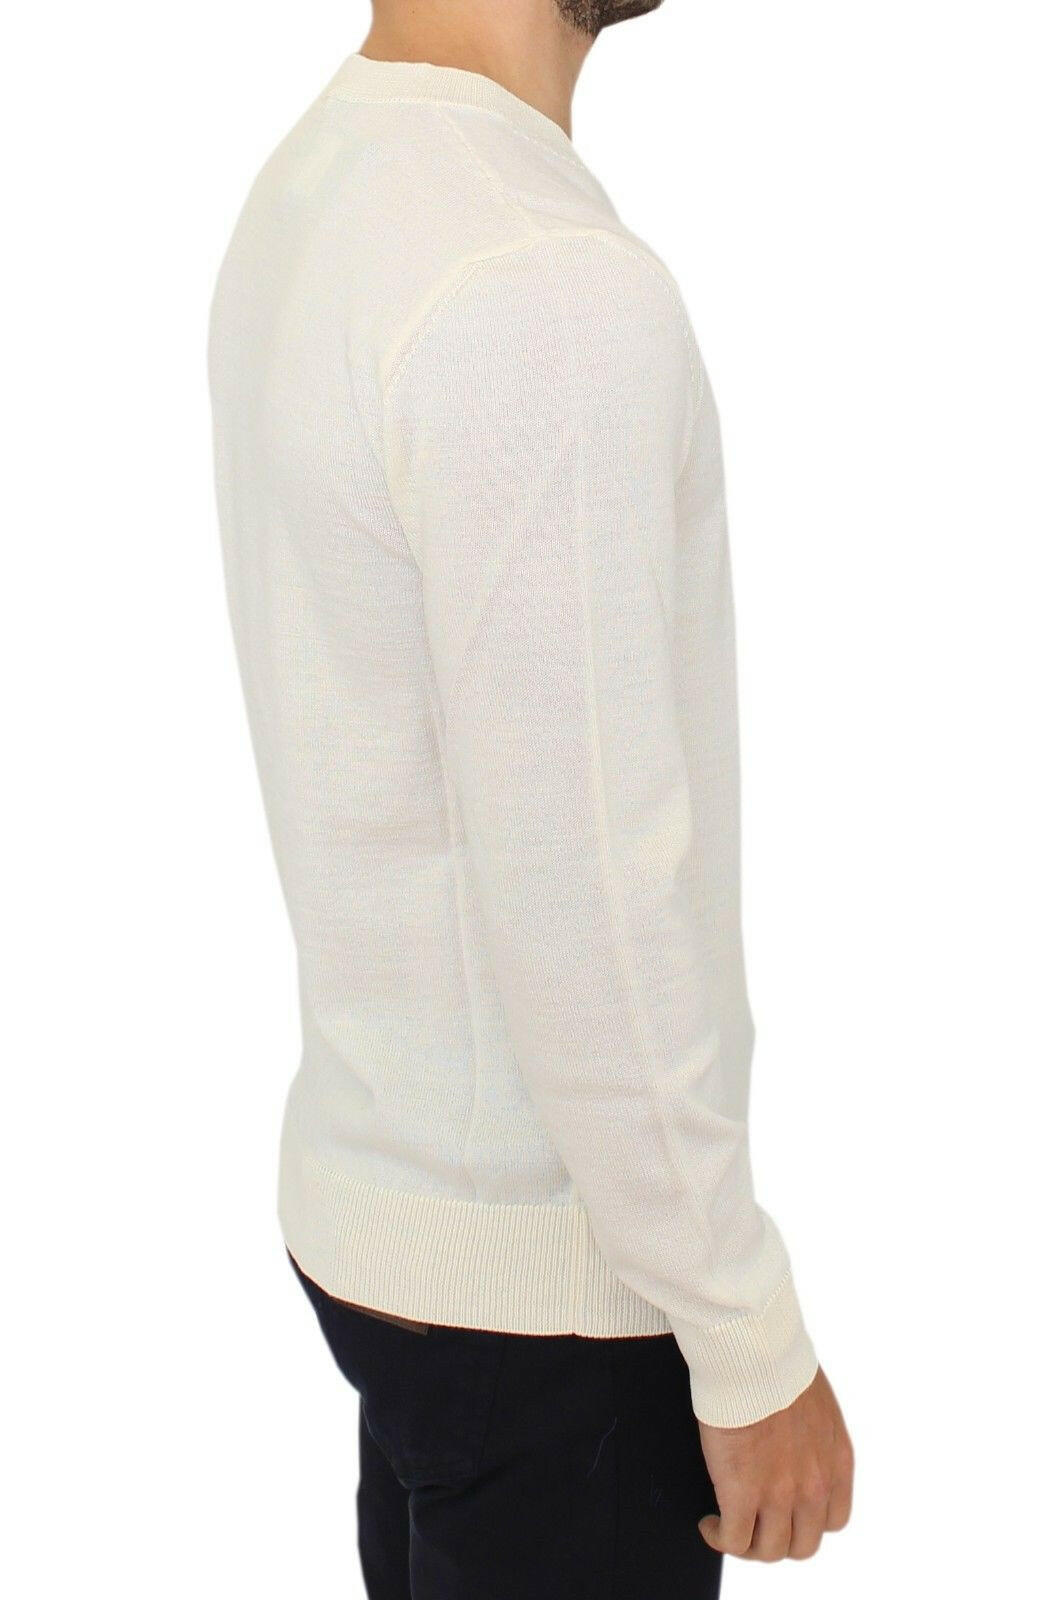 Ermanno Scervino Off White Wool Blend V-neck Pullover Sweater - GENUINE AUTHENTIC BRAND LLC  